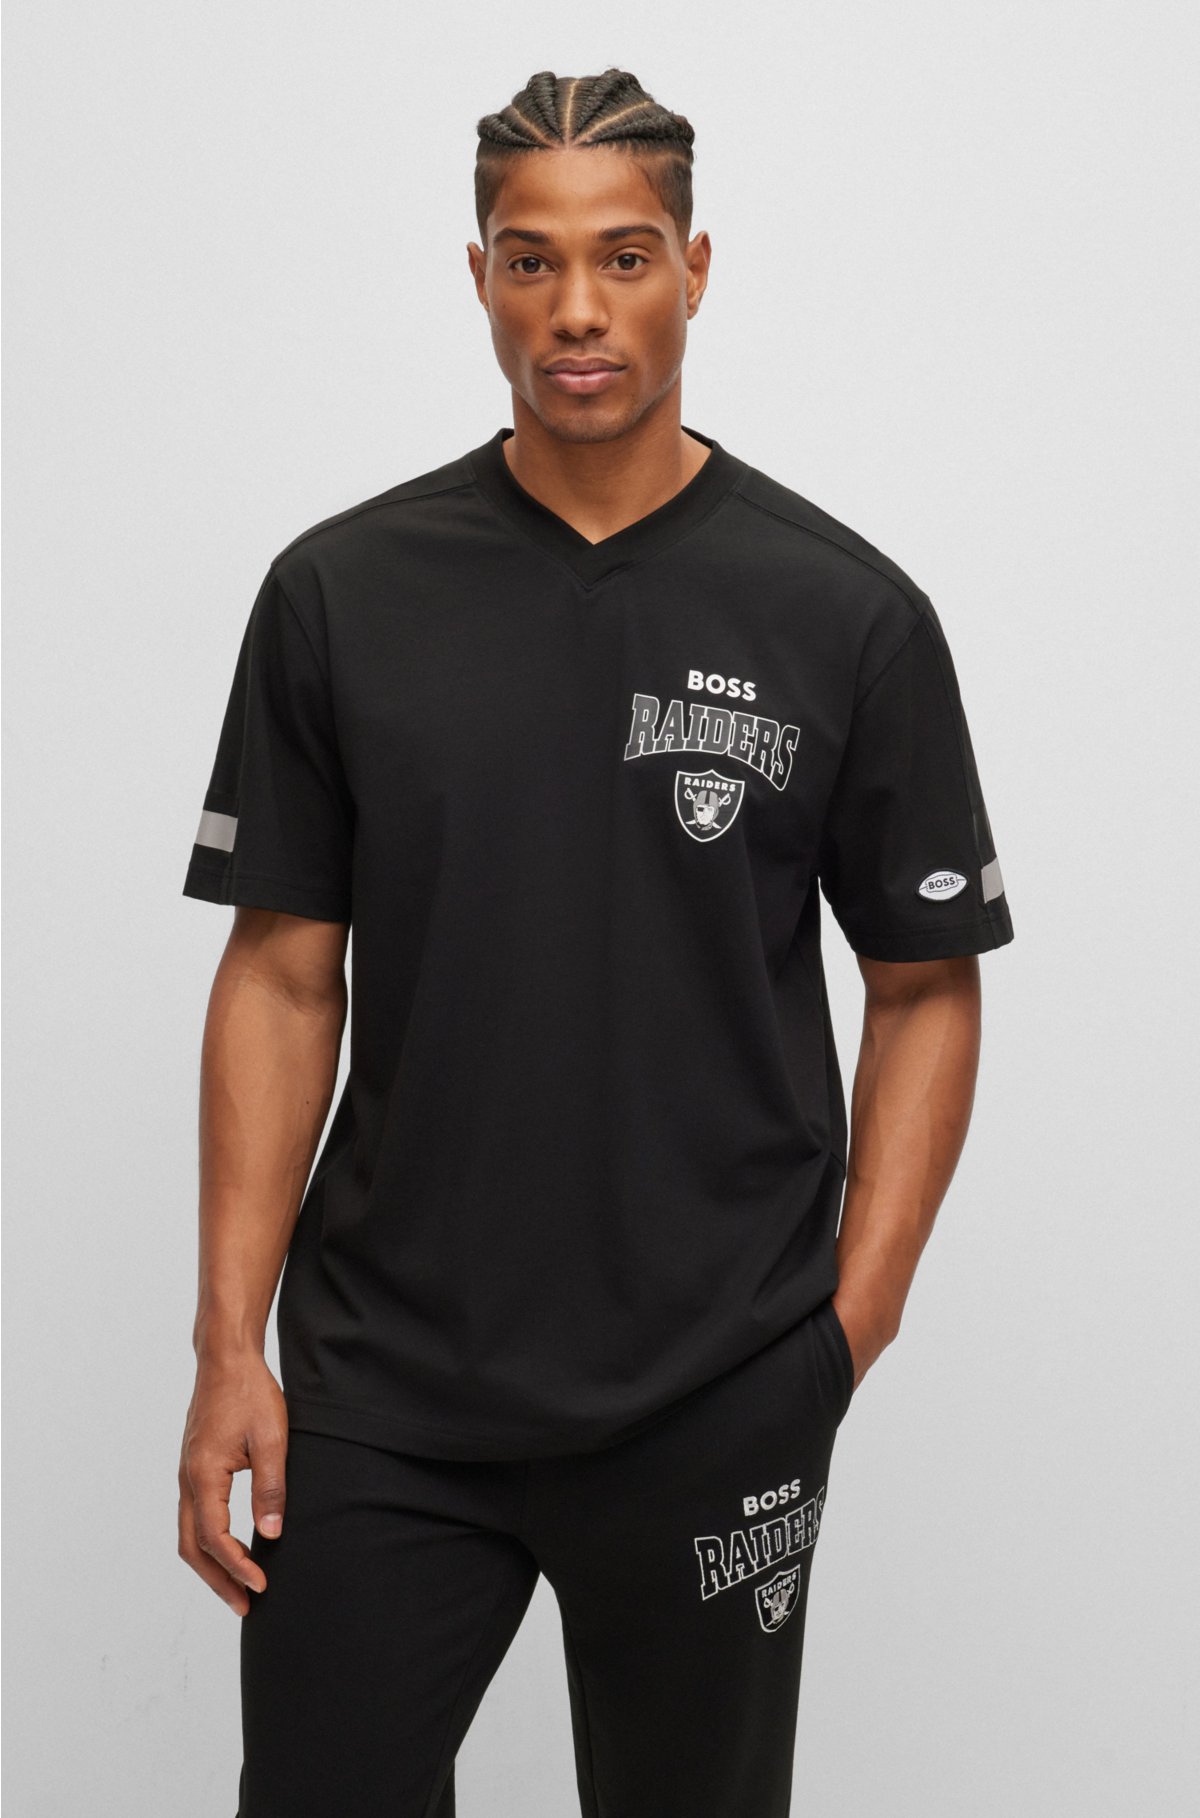 BOSS x NFL cotton-blend T-shirt with collaborative branding, Raiders